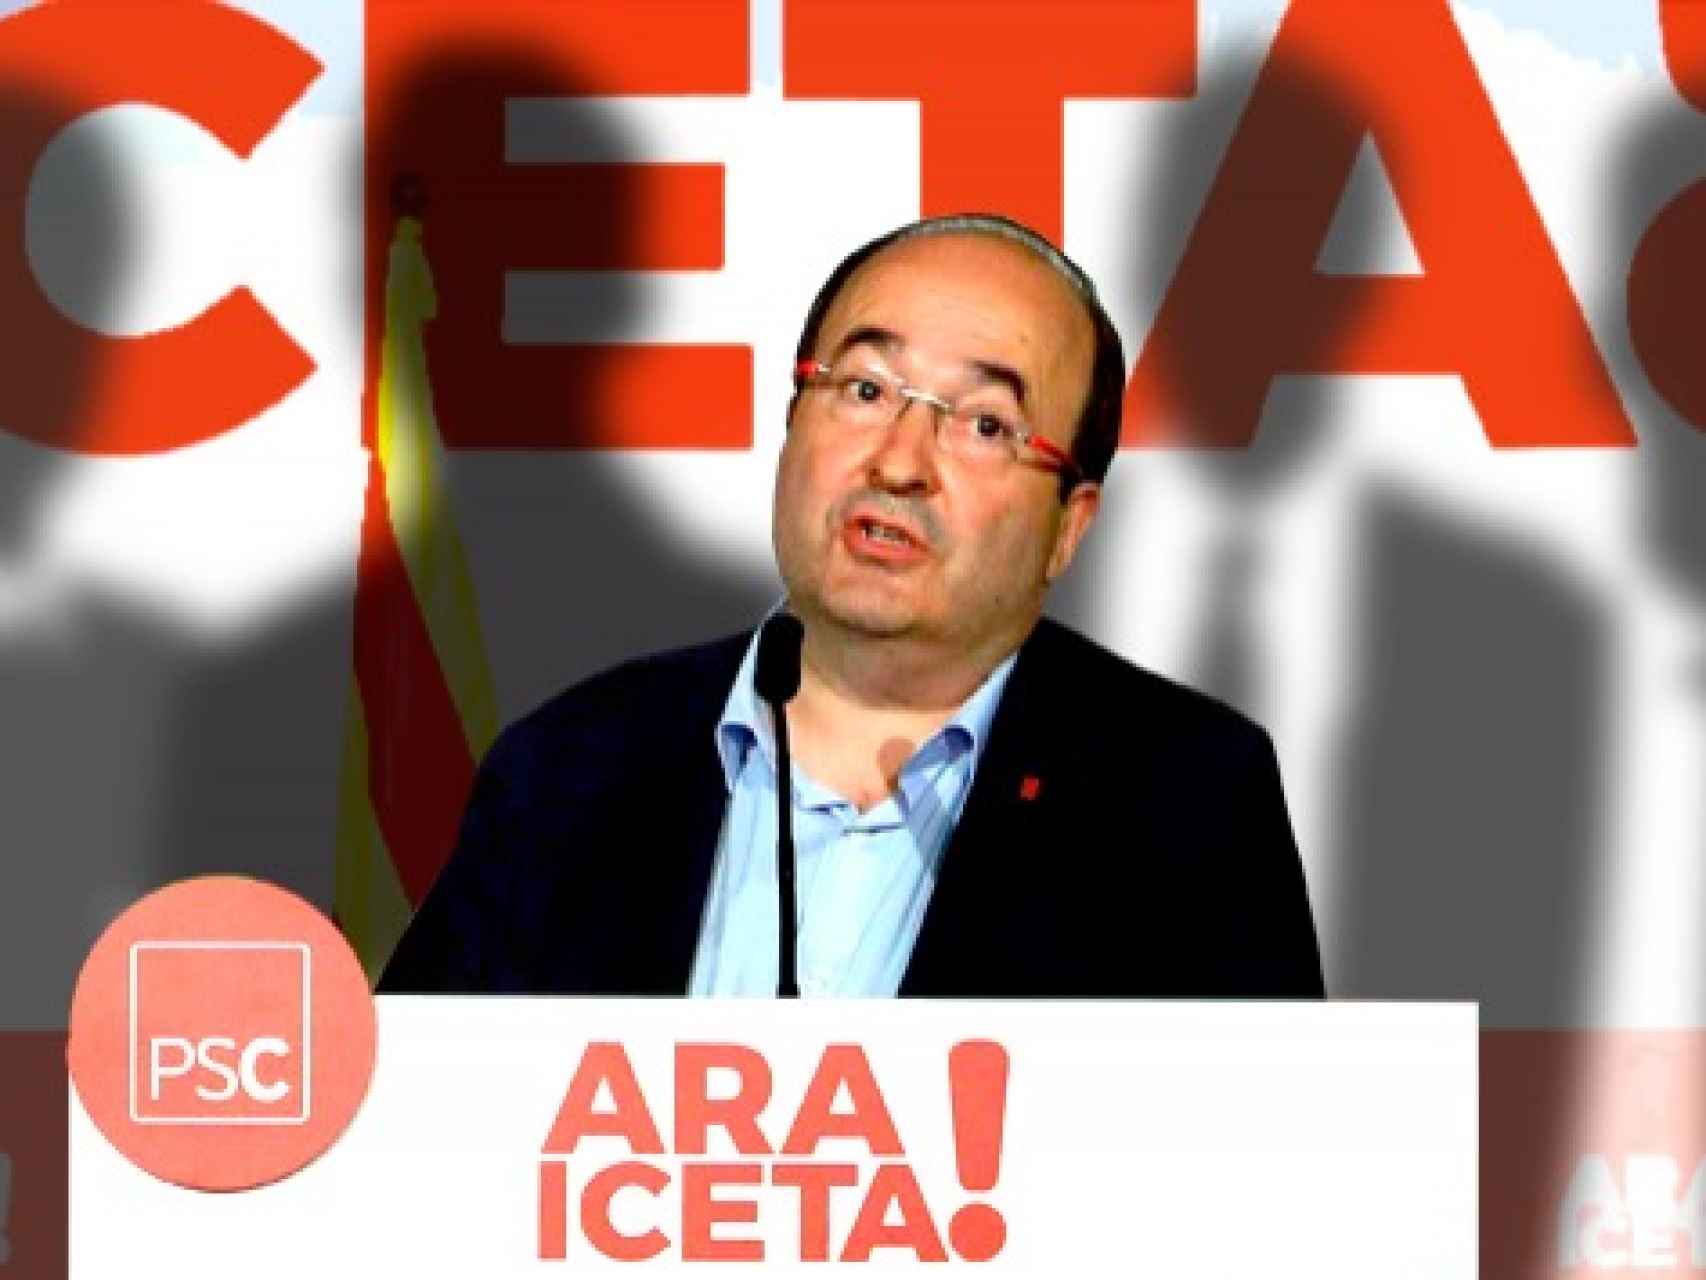 El candidato del PSC, Miquel Iceta.